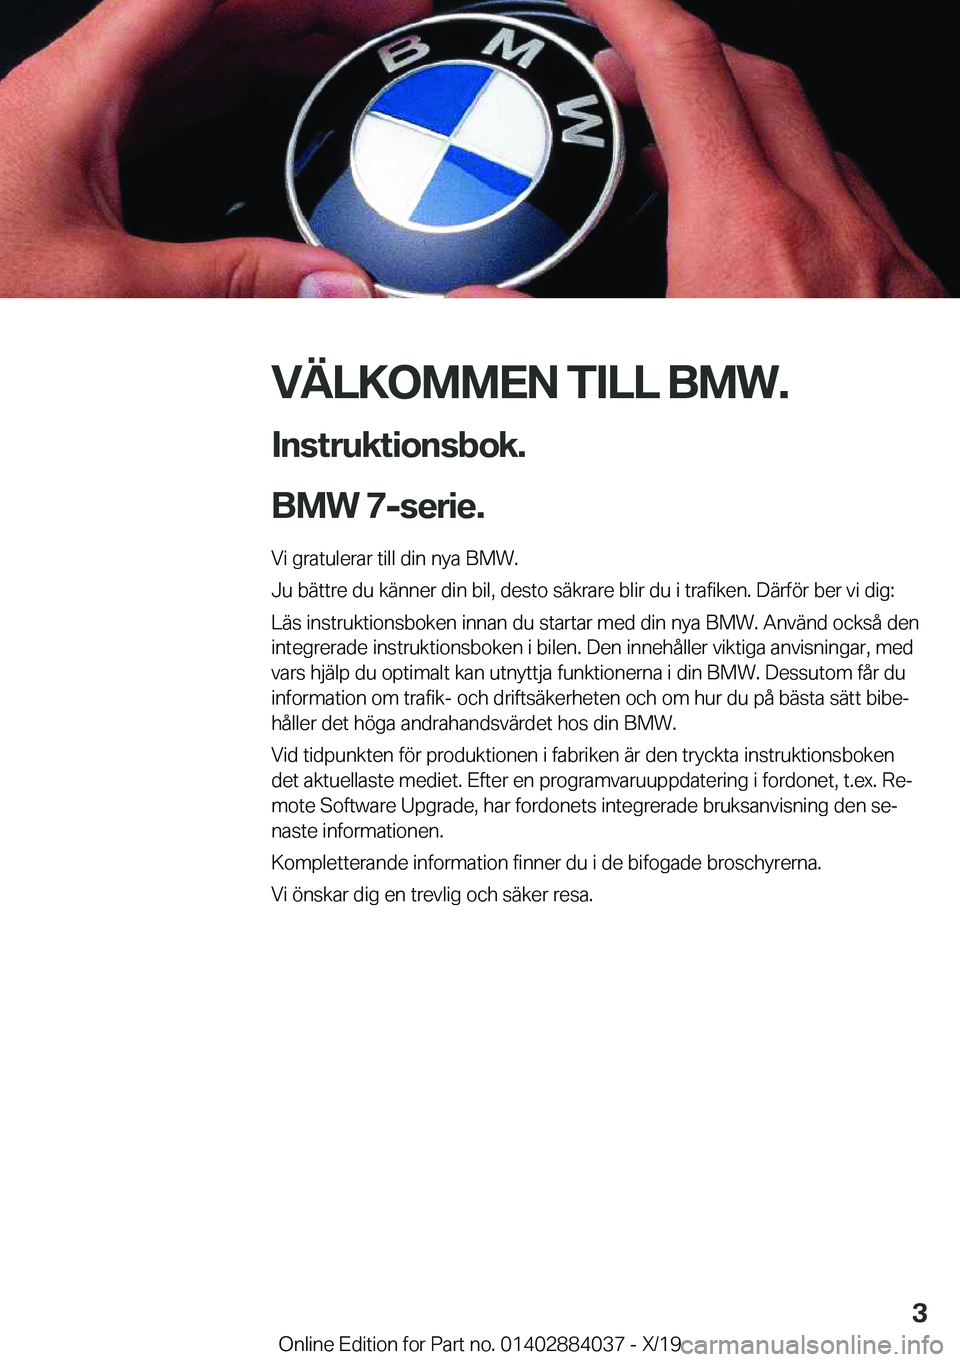 BMW 7 SERIES 2020  InstruktionsbÖcker (in Swedish) �V�Ä�L�K�O�M�M�E�N��T�I�L�L��B�M�W�.�I�n�s�t�r�u�k�t�i�o�n�s�b�o�k�.
�B�M�W��7�-�s�e�r�i�e�.
�V�i��g�r�a�t�u�l�e�r�a�r��t�i�l�l��d�i�n��n�y�a��B�M�W�.
�J�u��b�ä�t�t�r�e��d�u��k�ä�n�n�e�r